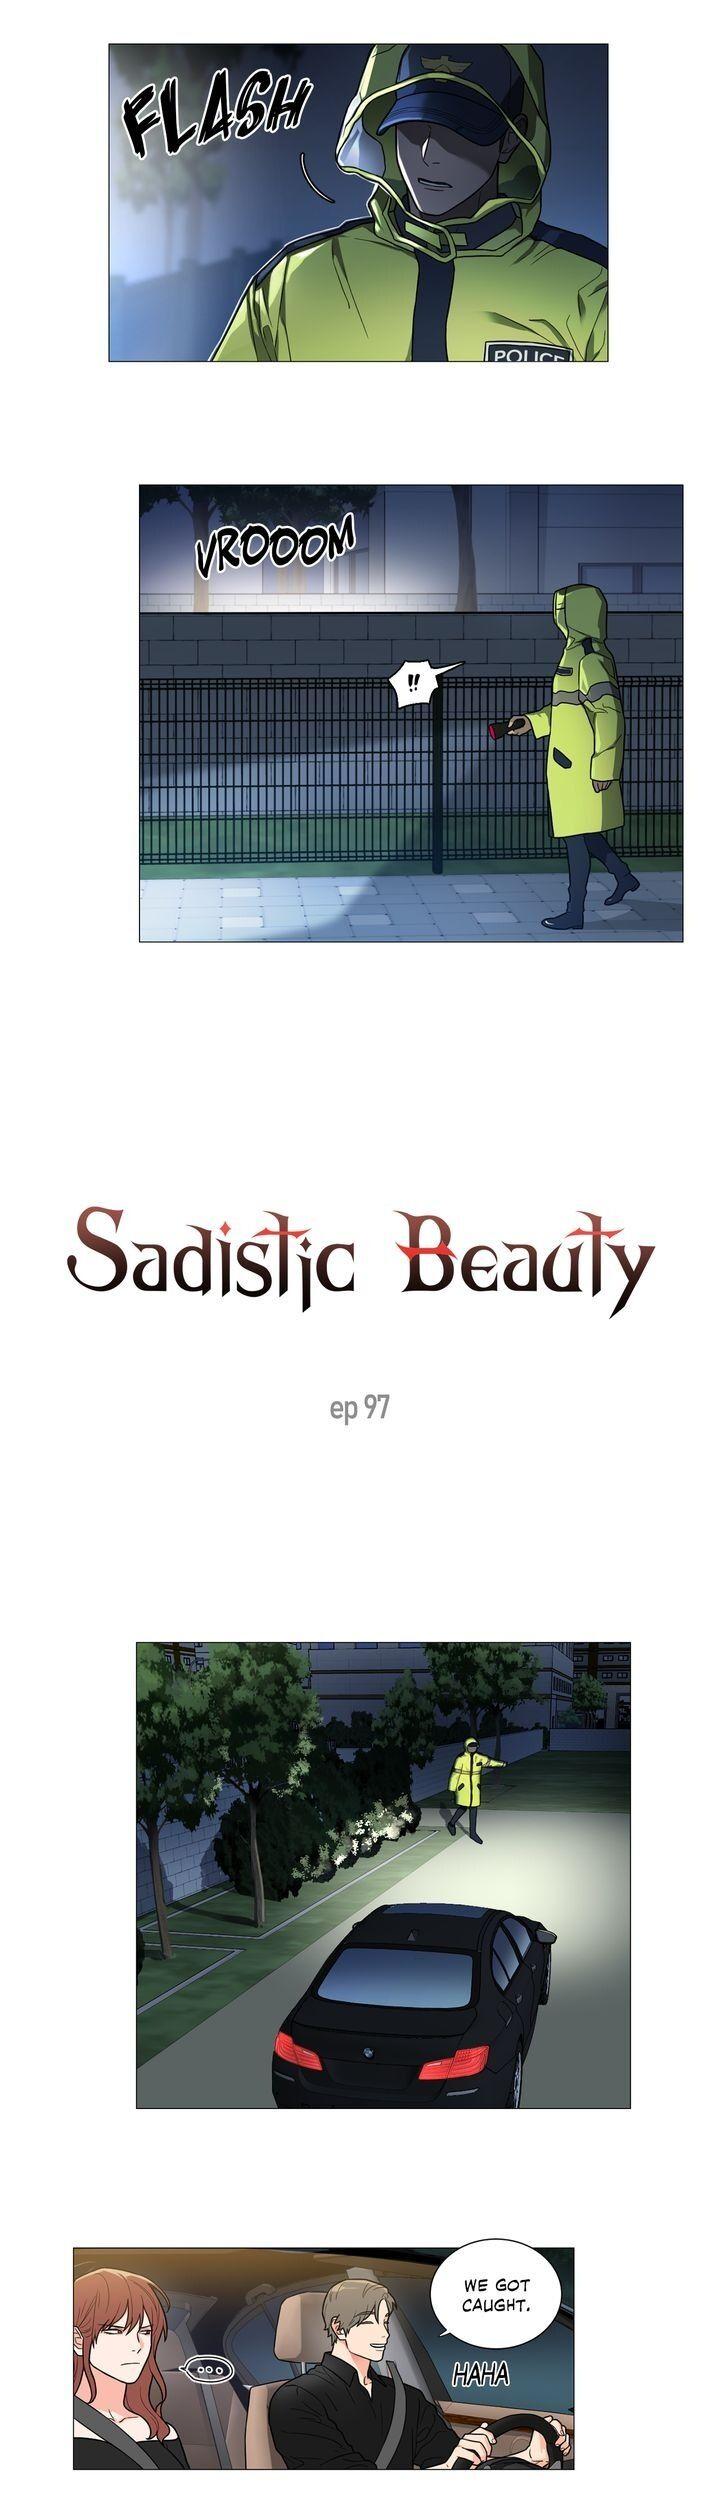 Sadistic Beauty Chapter 97 - Page 2